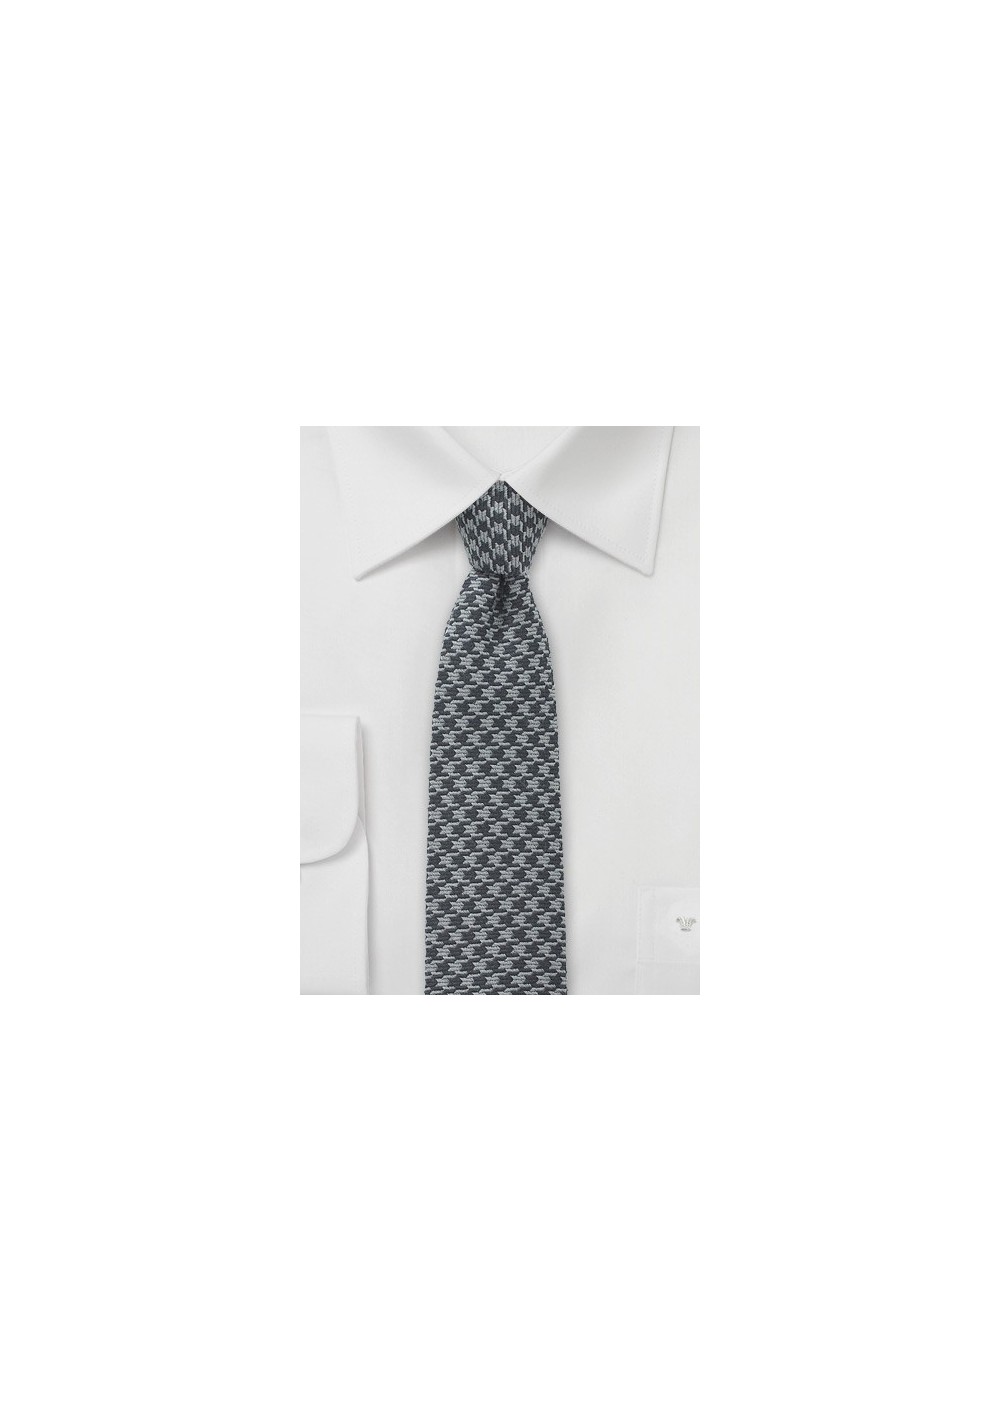 Gray Dogstooth Men's Necktie in Skinny Cut